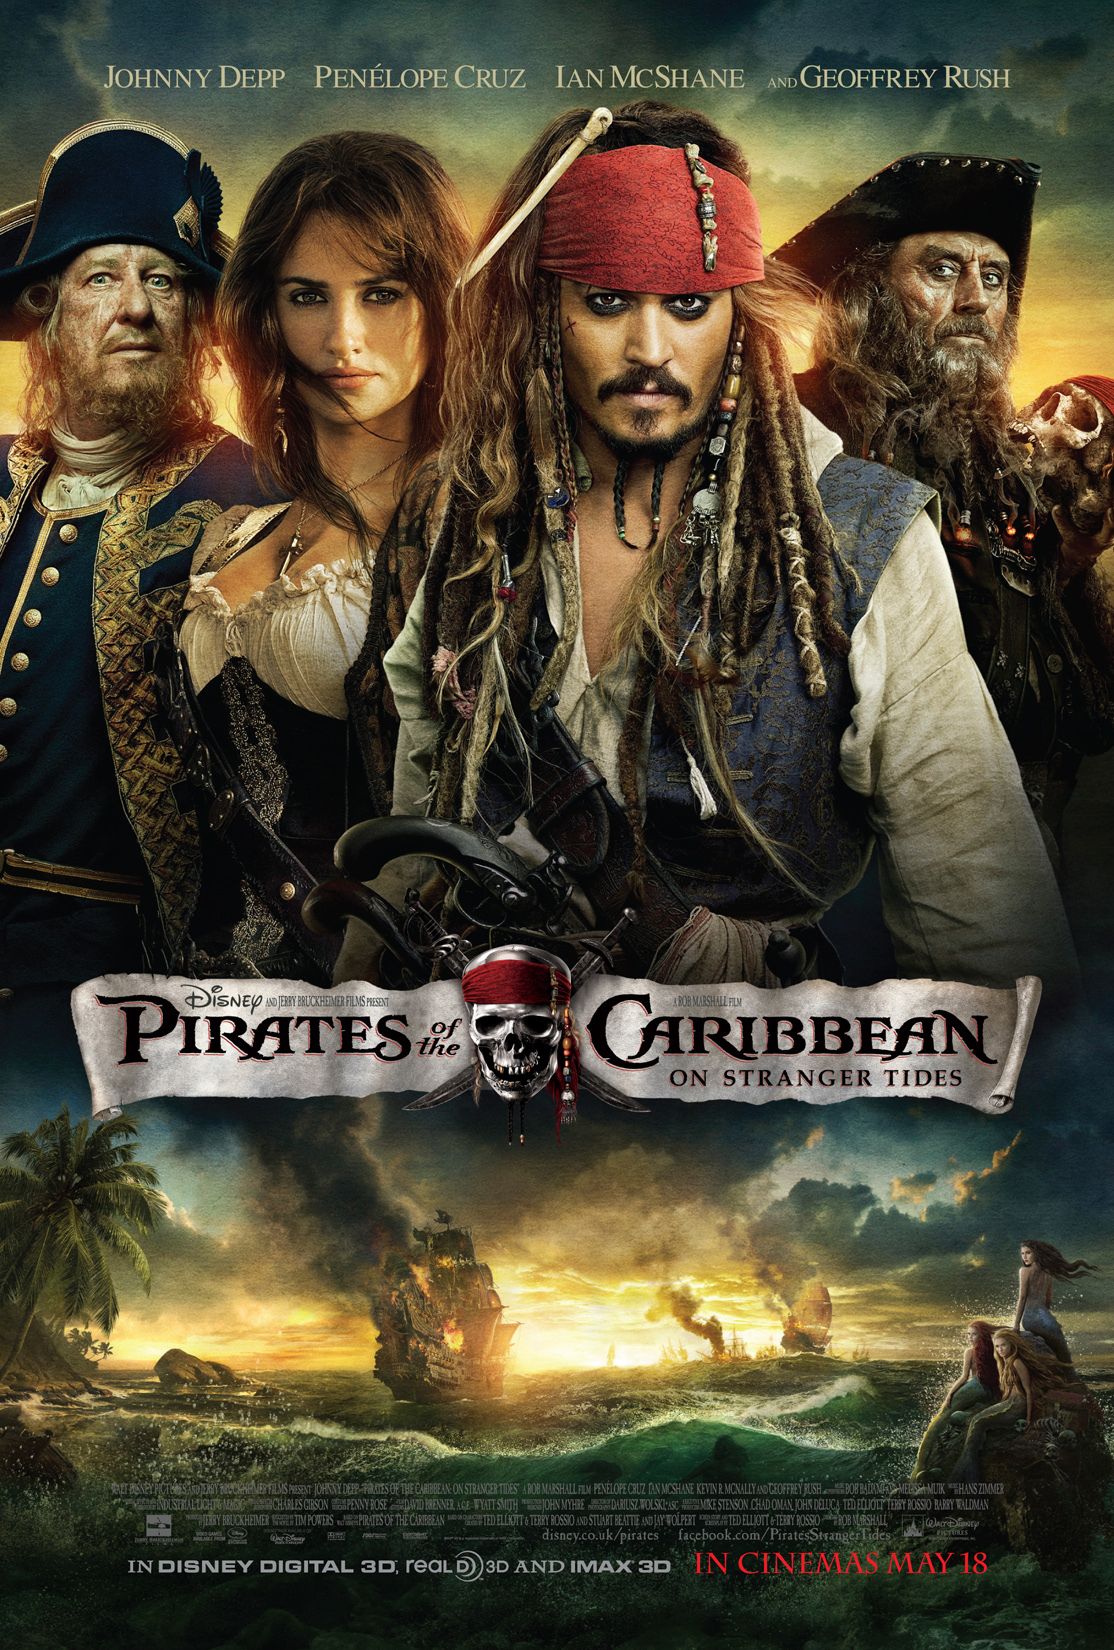 Pirates of the Caribbean on stranger tides movie poster